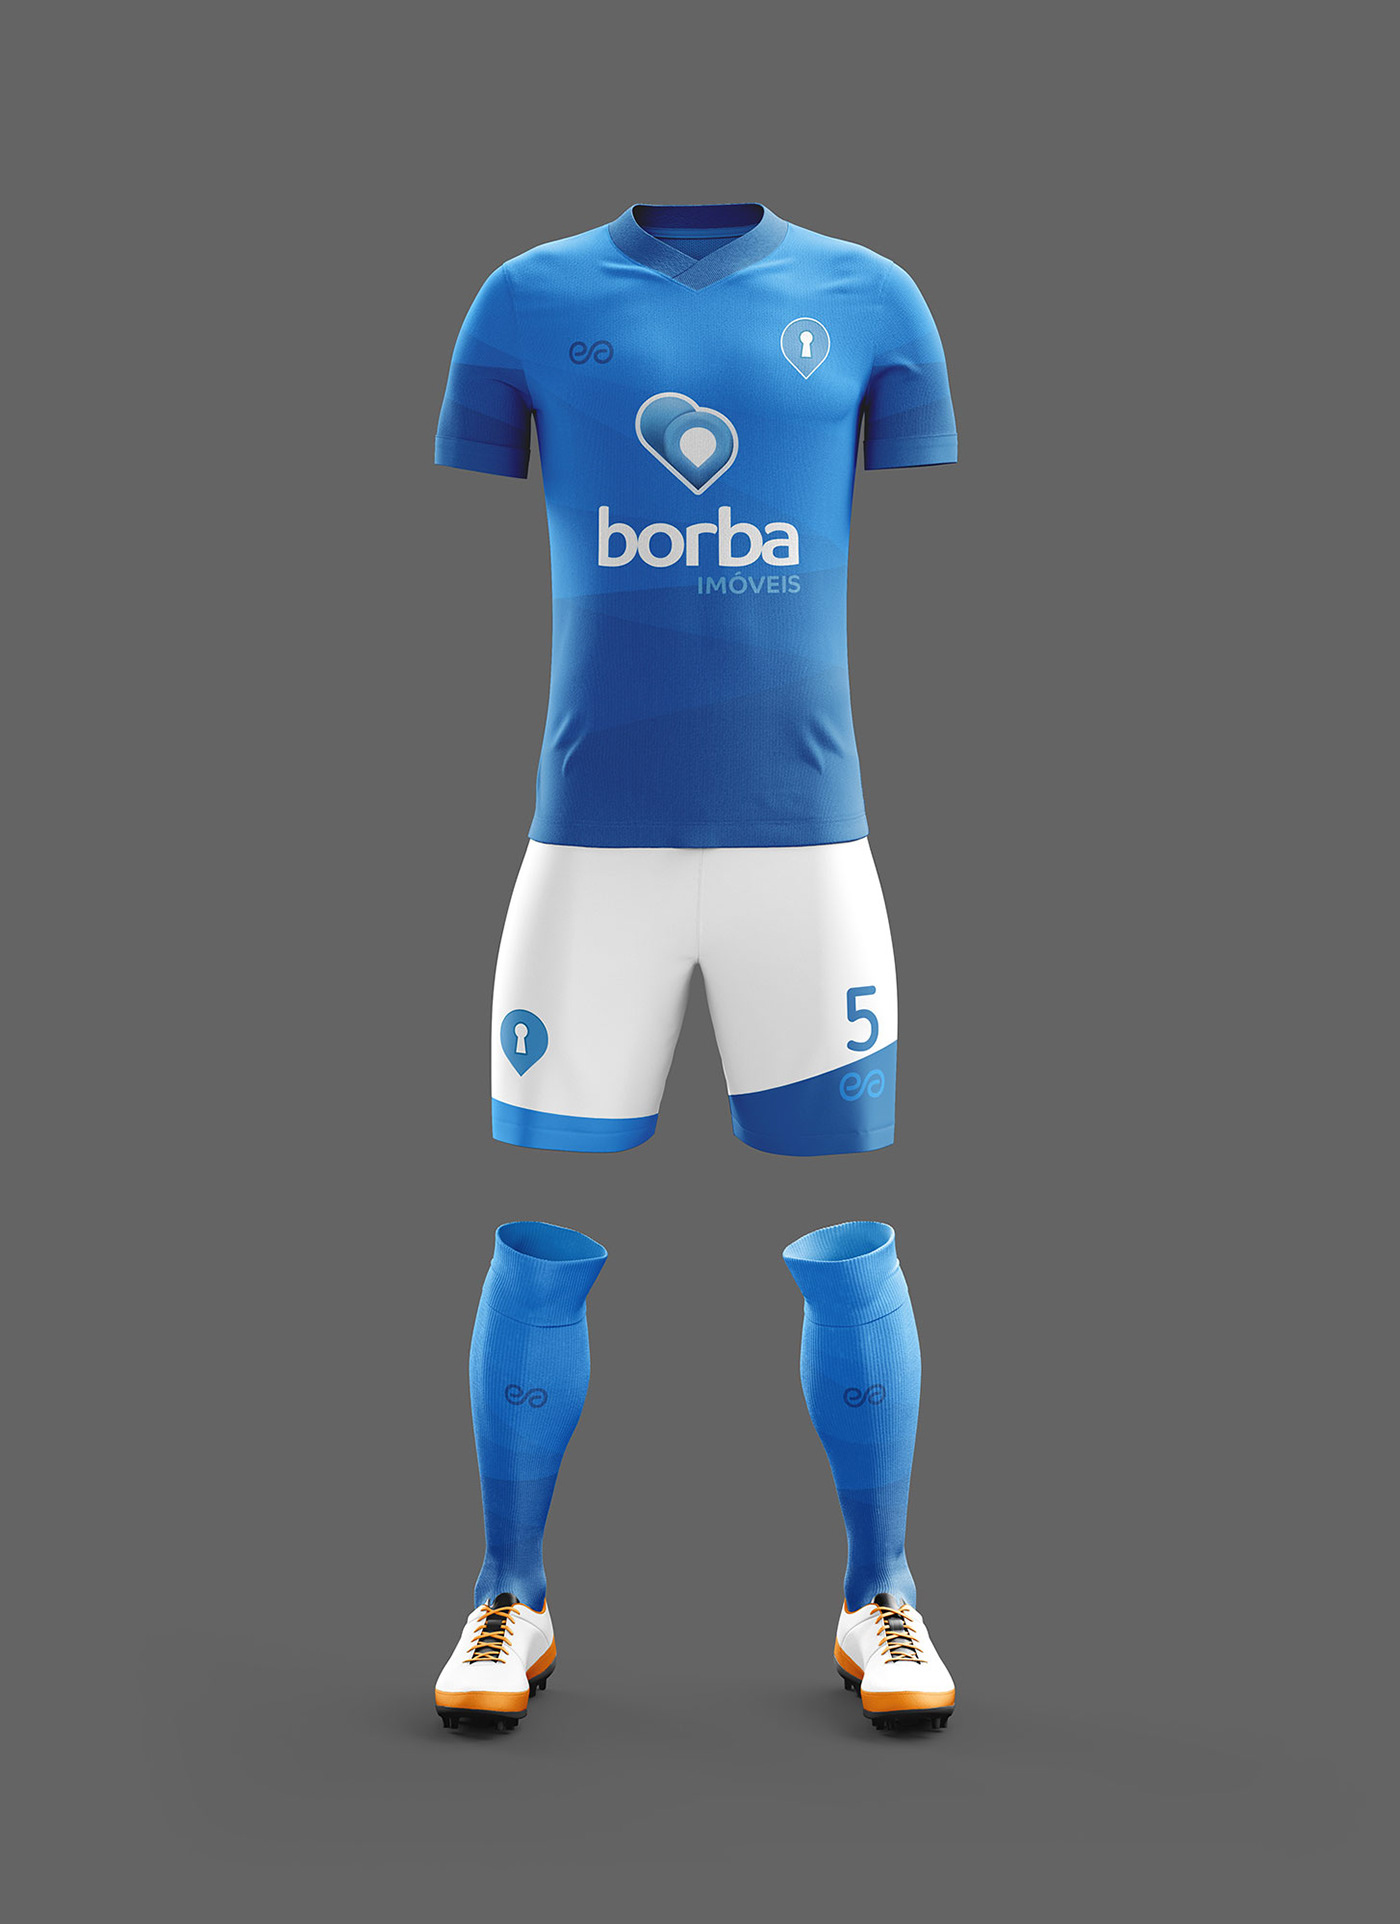 jersey uniforme kit soccer futebol brand Emporio Adamantis camisa terno